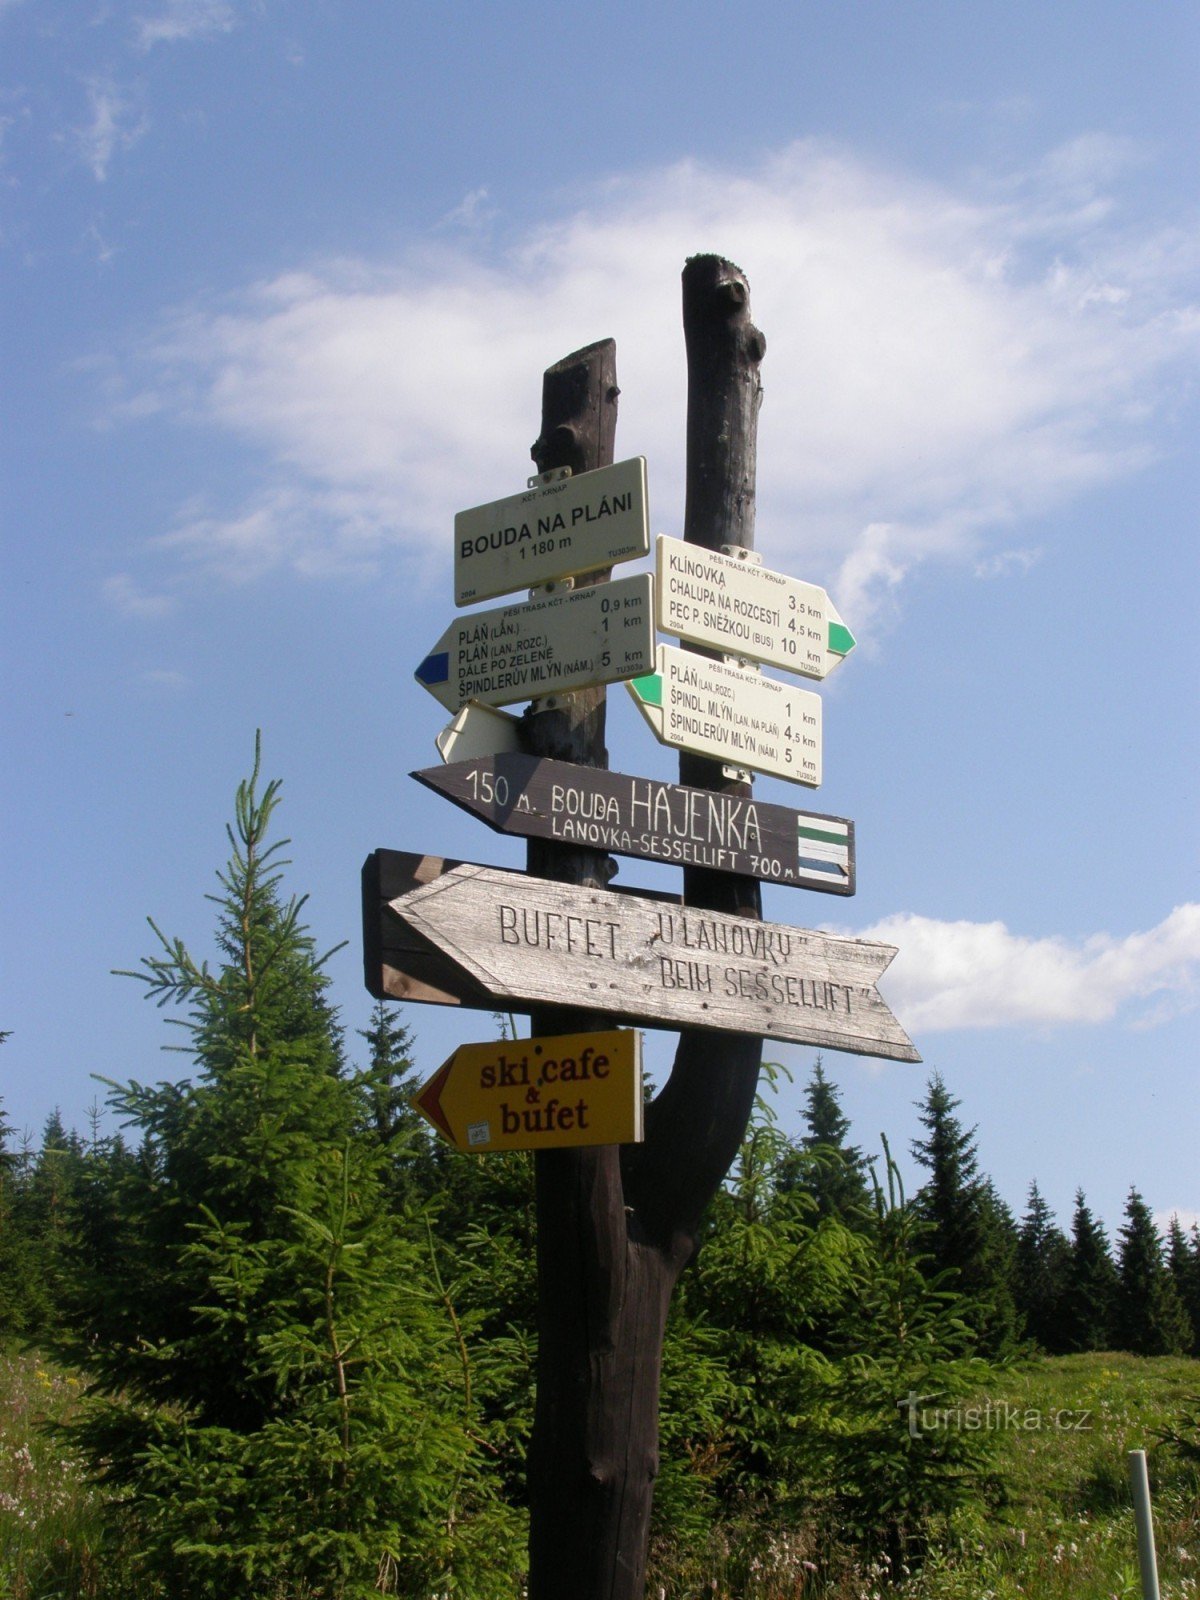 the tourist crossroads Bouda na Pláni